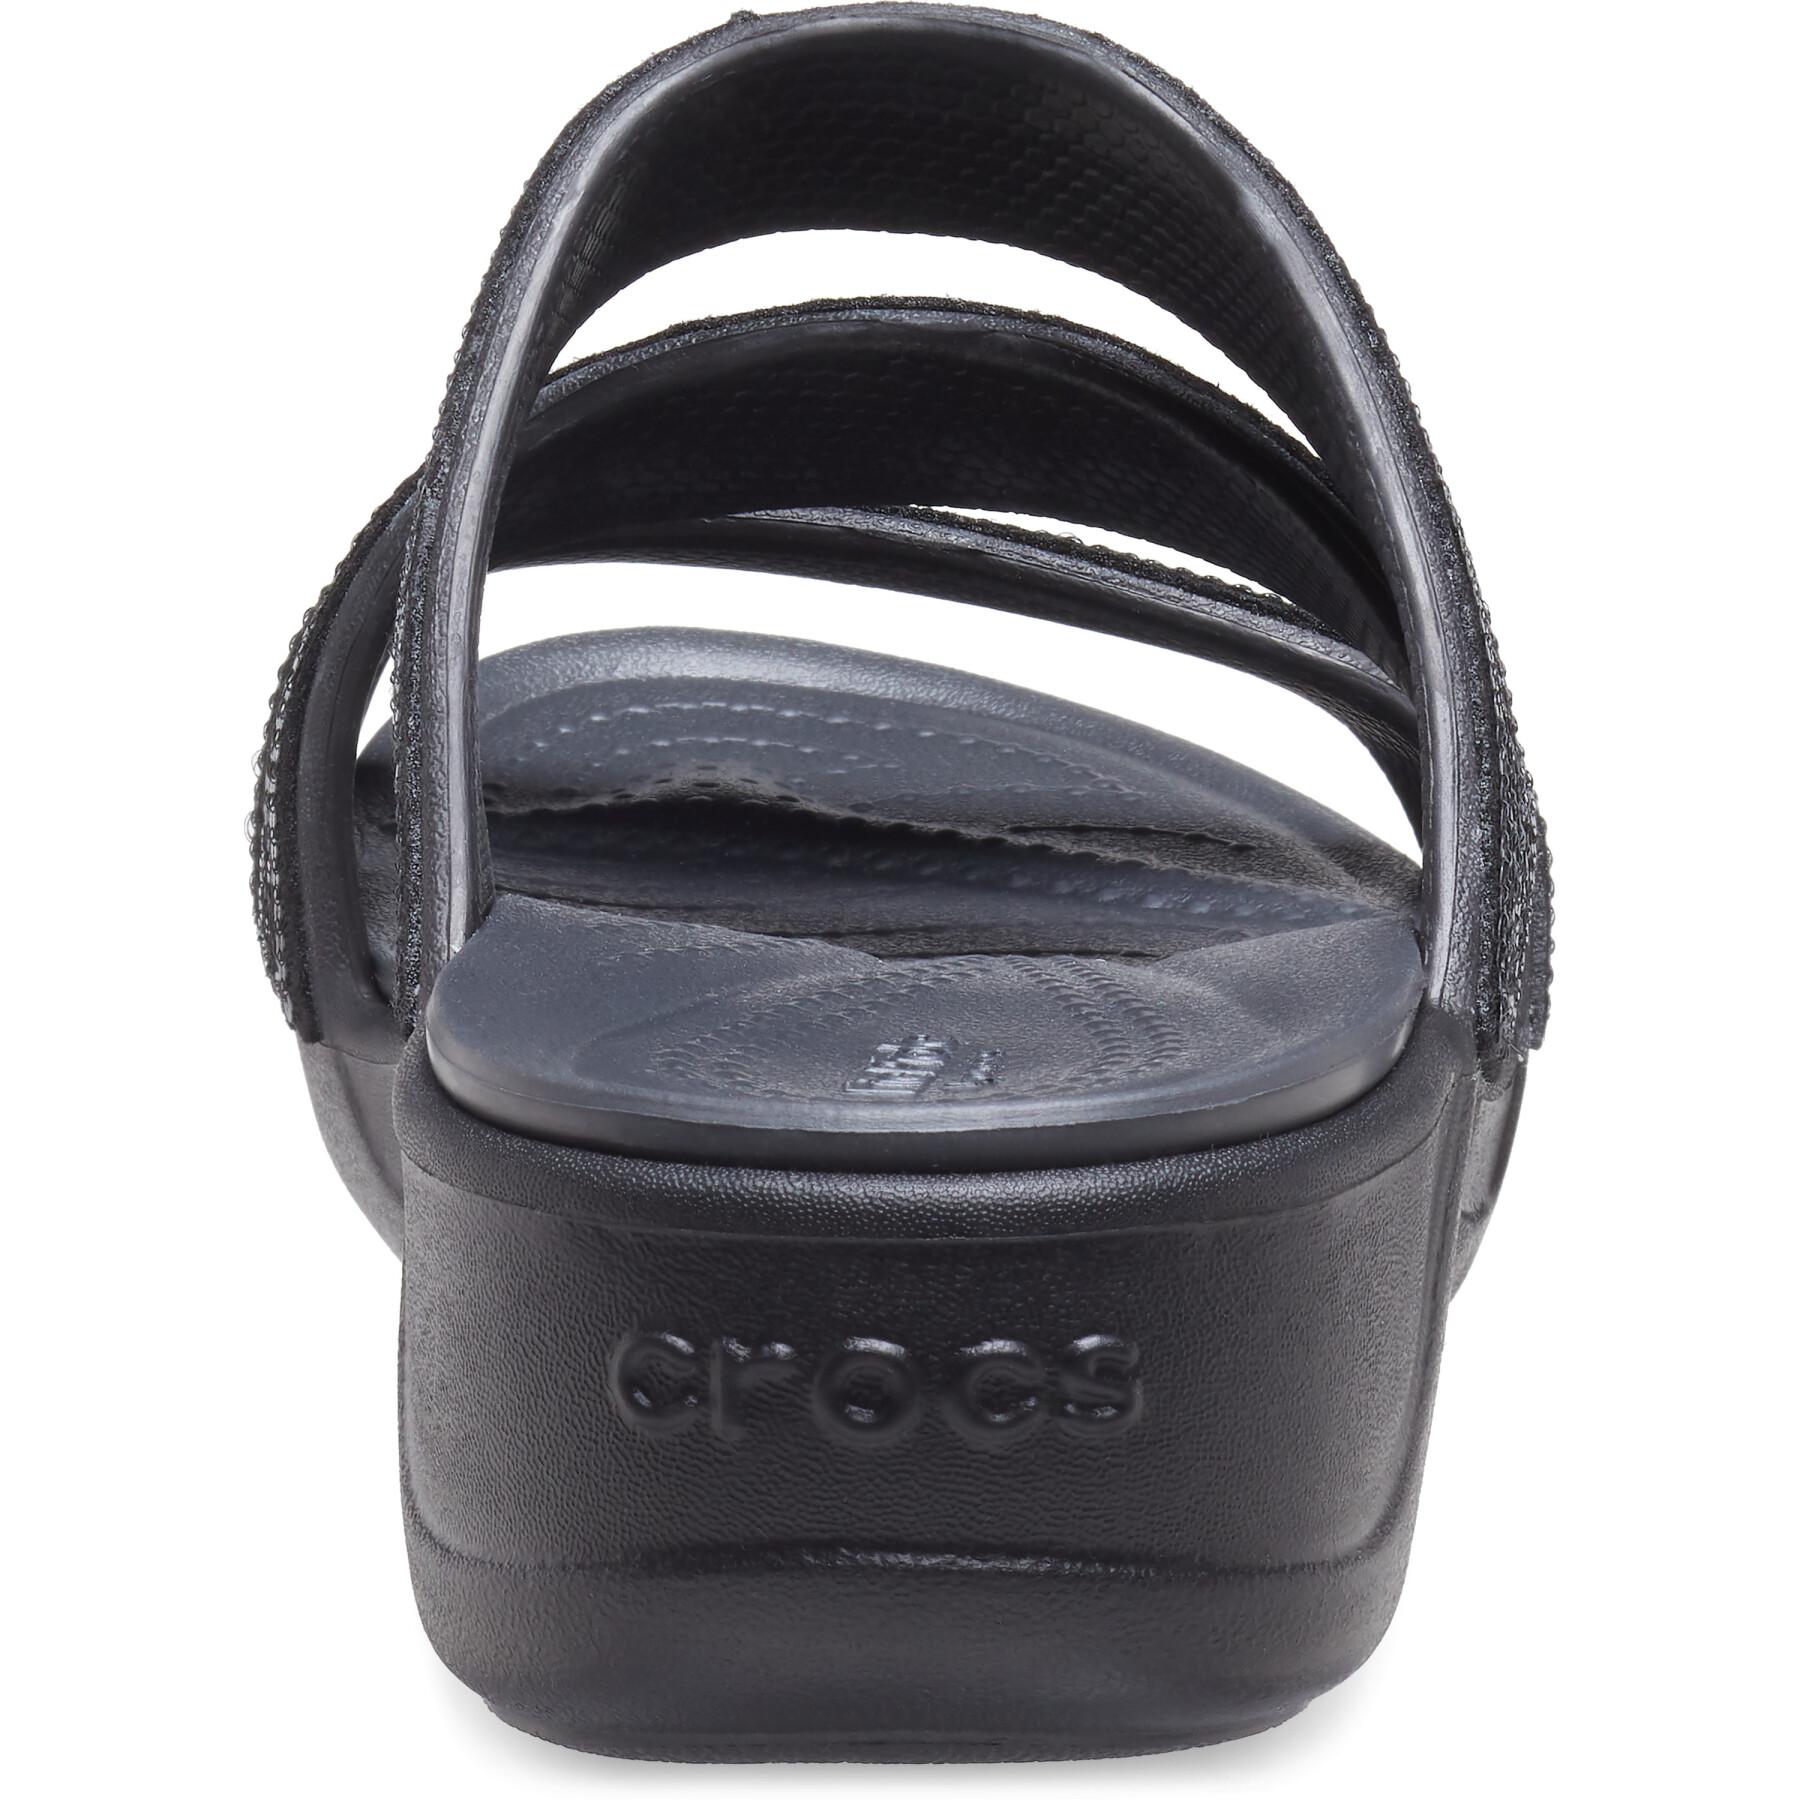 Women's sandals Crocs Boca Strappy